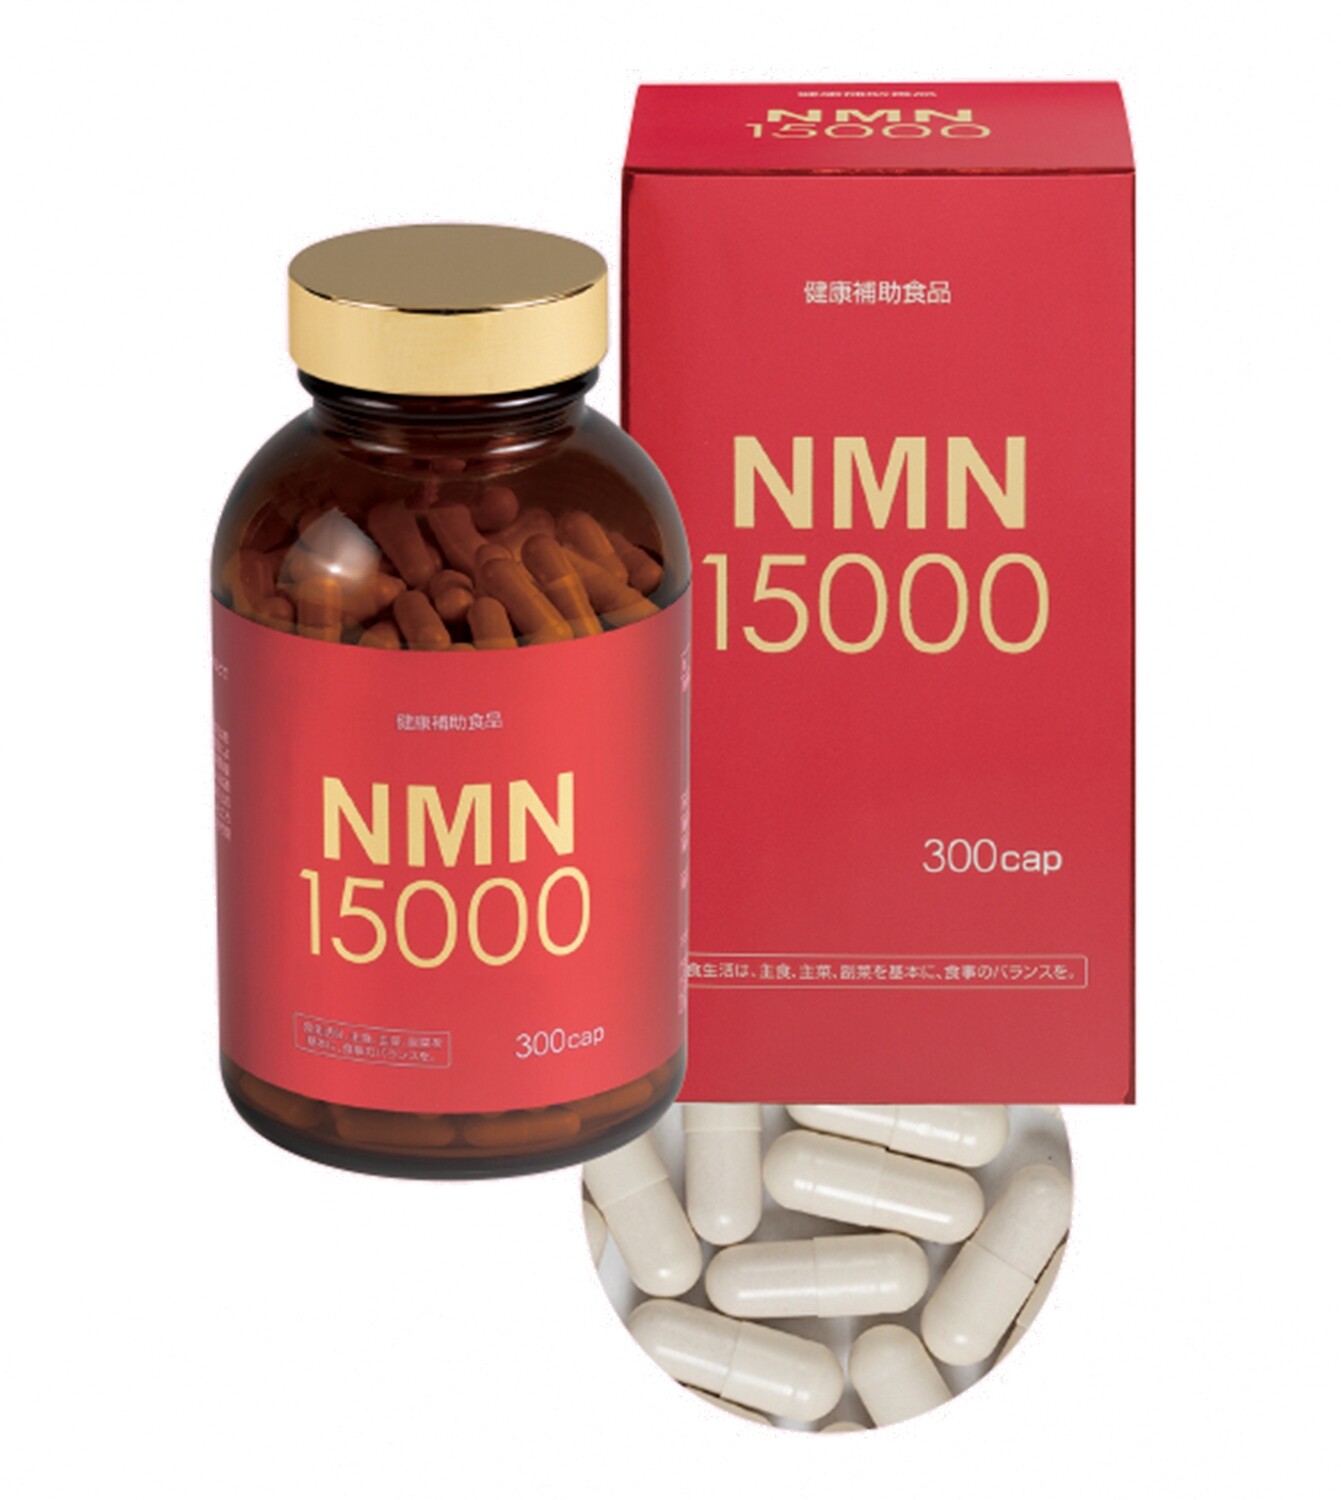 NMN 15000